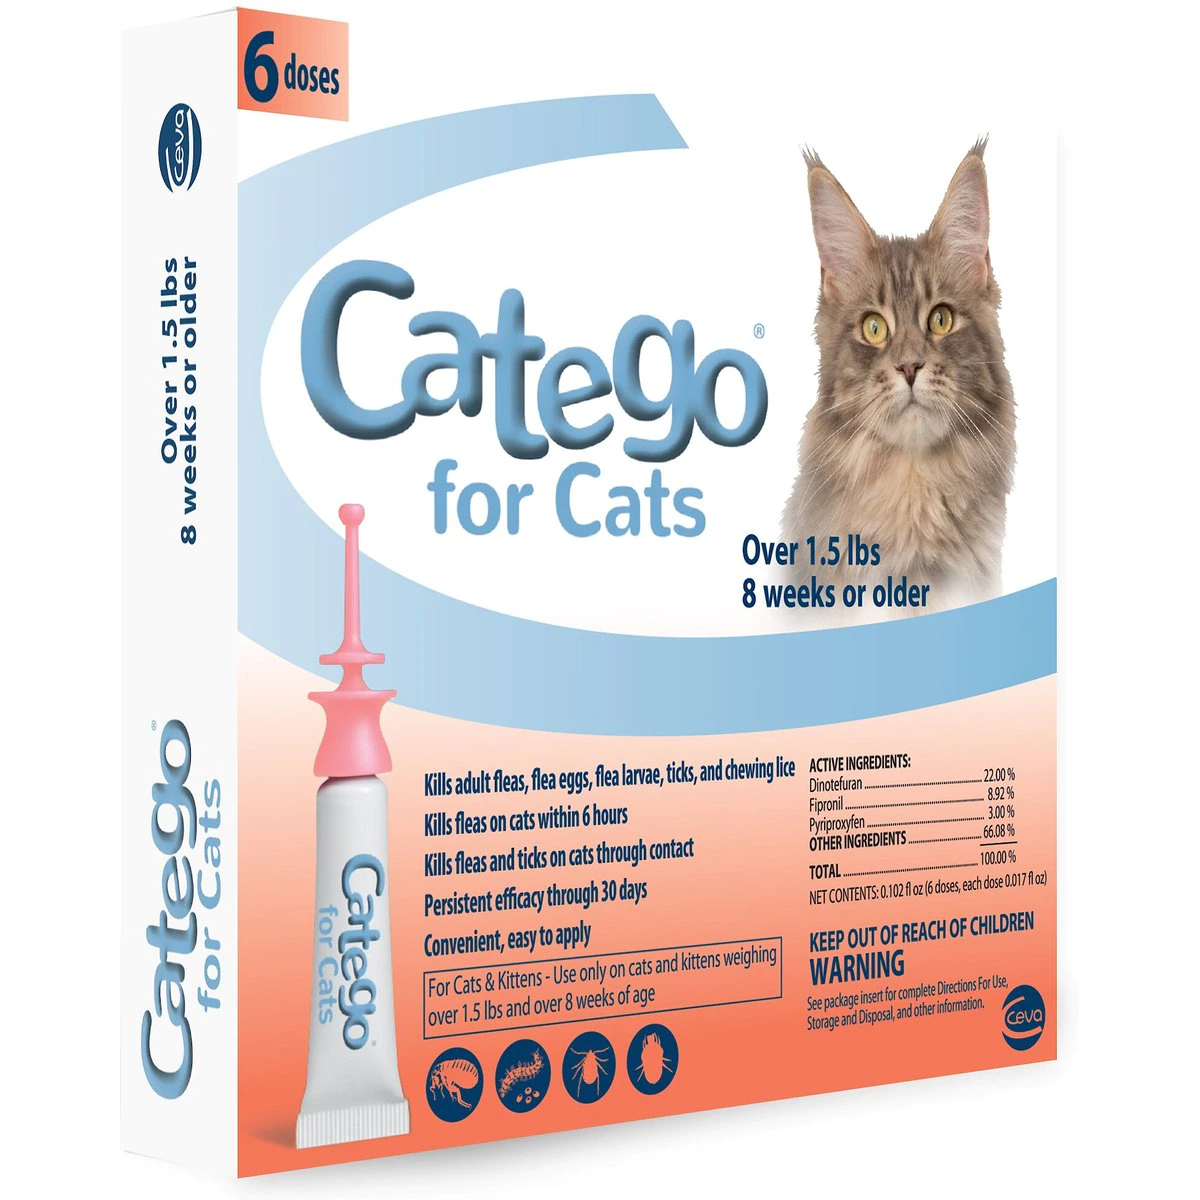 Catego Flea & Tick Spot Treatment for Cats